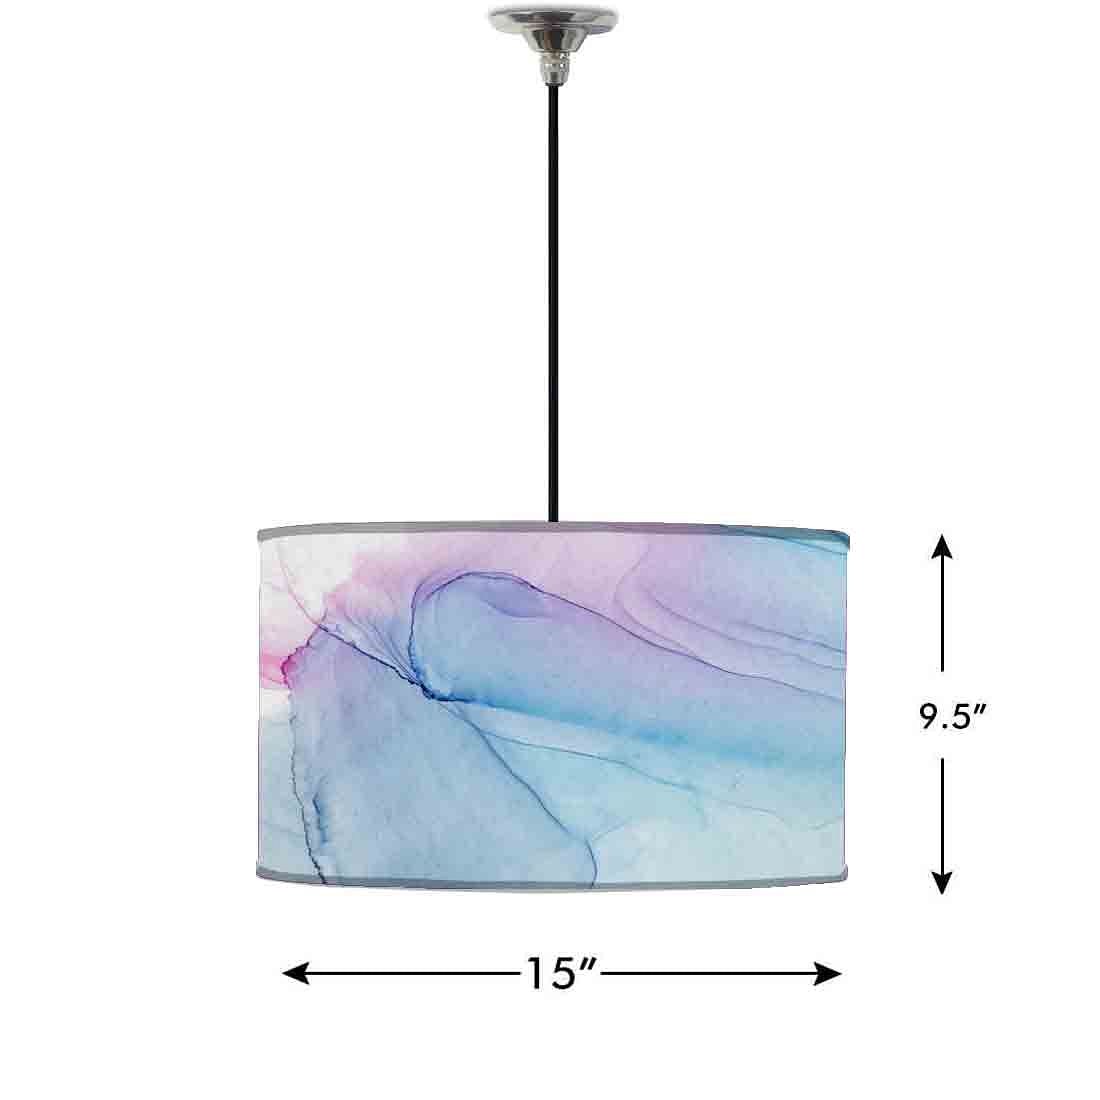 Ceiling Lamp Hanging Drum Lampshade - Blue Gray Ink Watercolor Nutcase